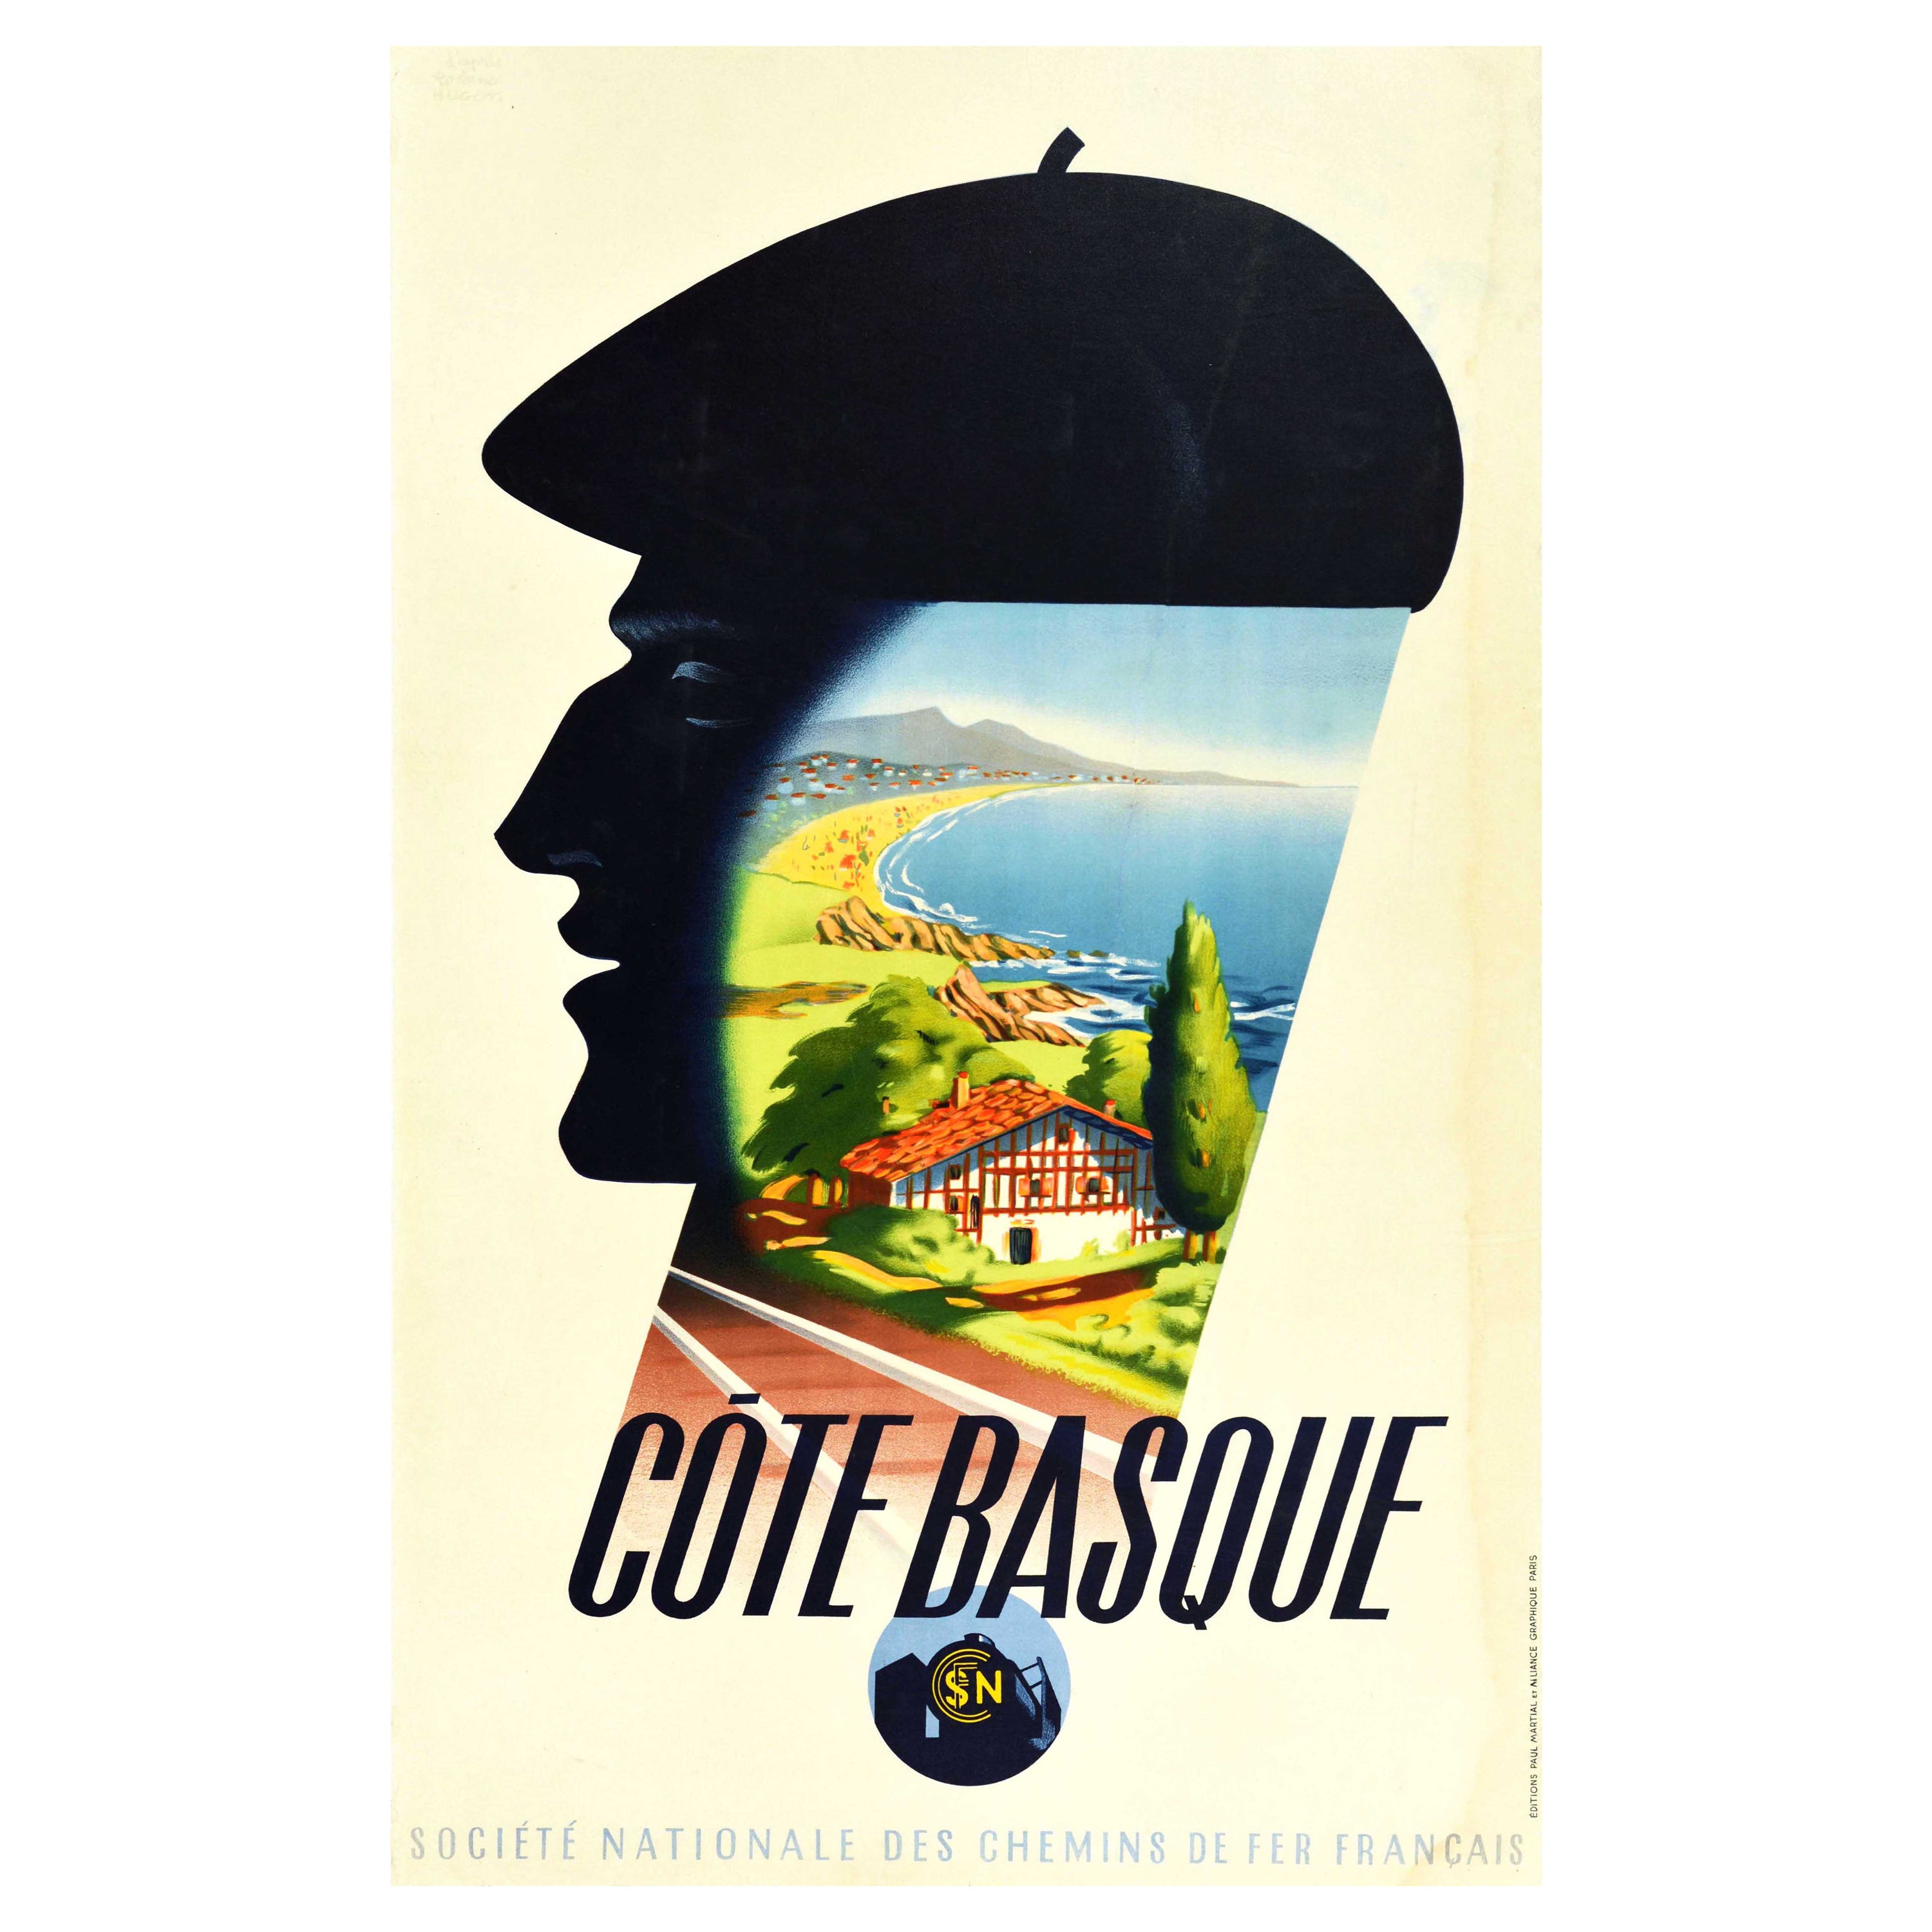 Original Vintage Poster For Cote Basque Coast SNCF French Railway Travel Design